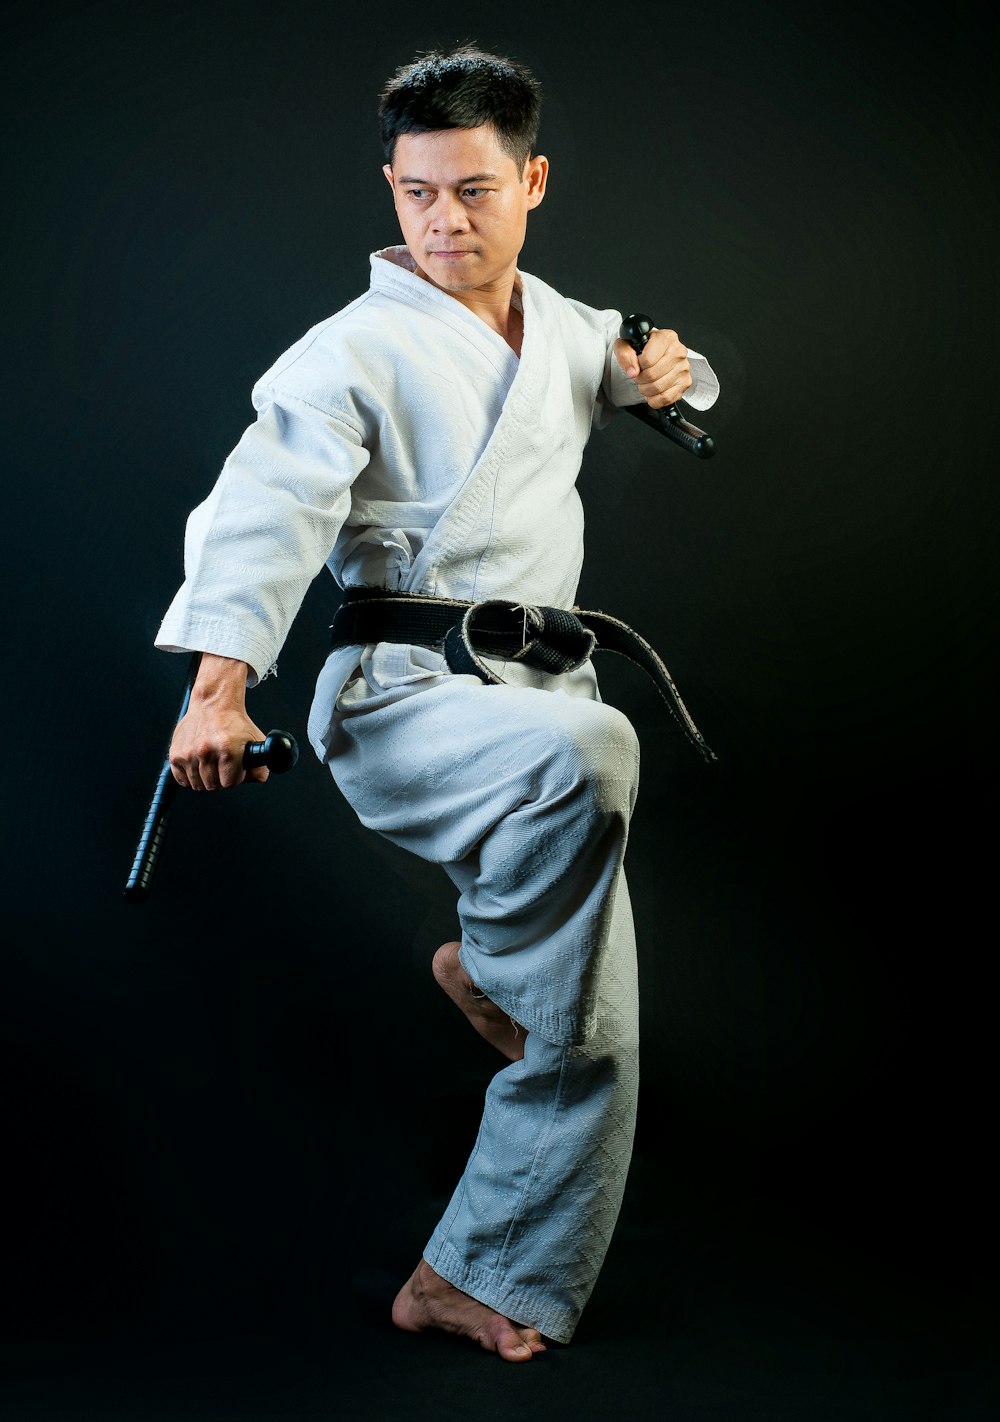 Black belt martial artist standing with one leg photo – Free Martial art  Image on Unsplash